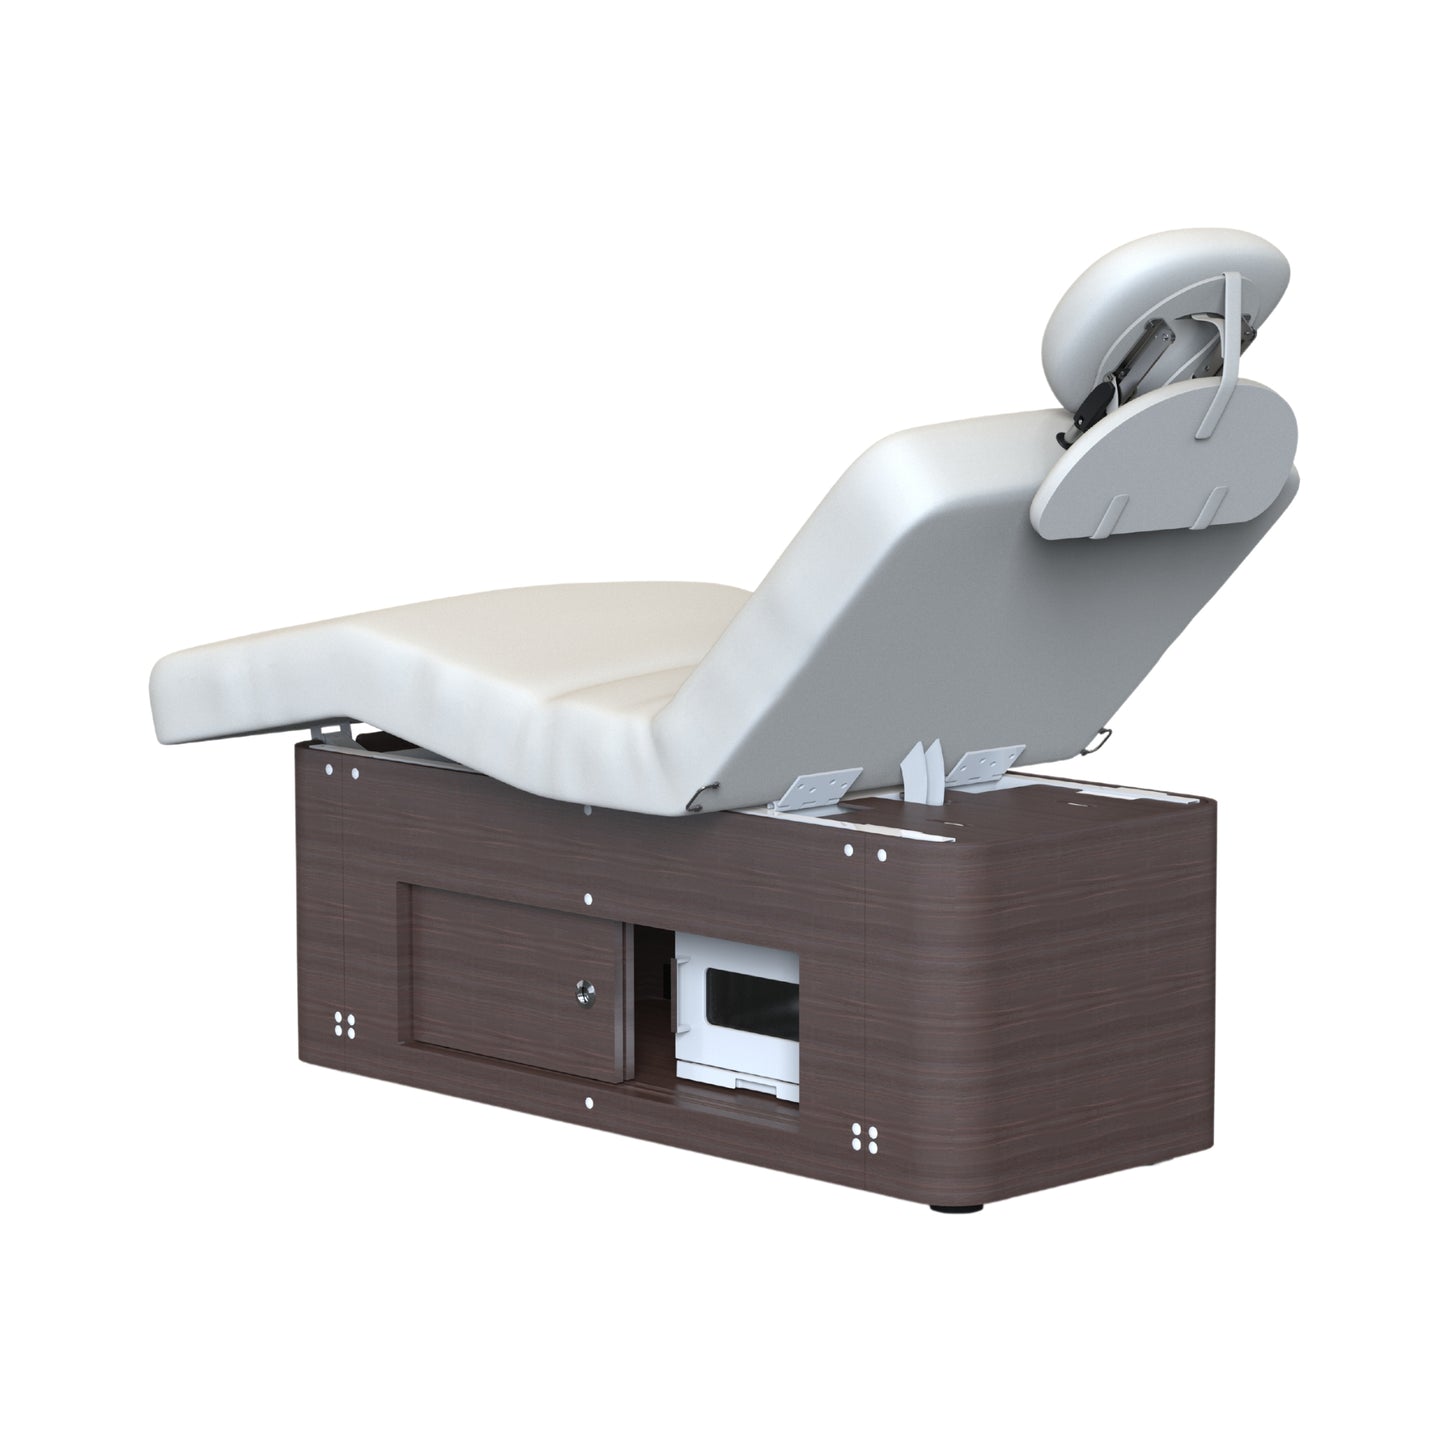 SoftSerene Massage Table - Silverfox 2285 - Sitting Position Back 